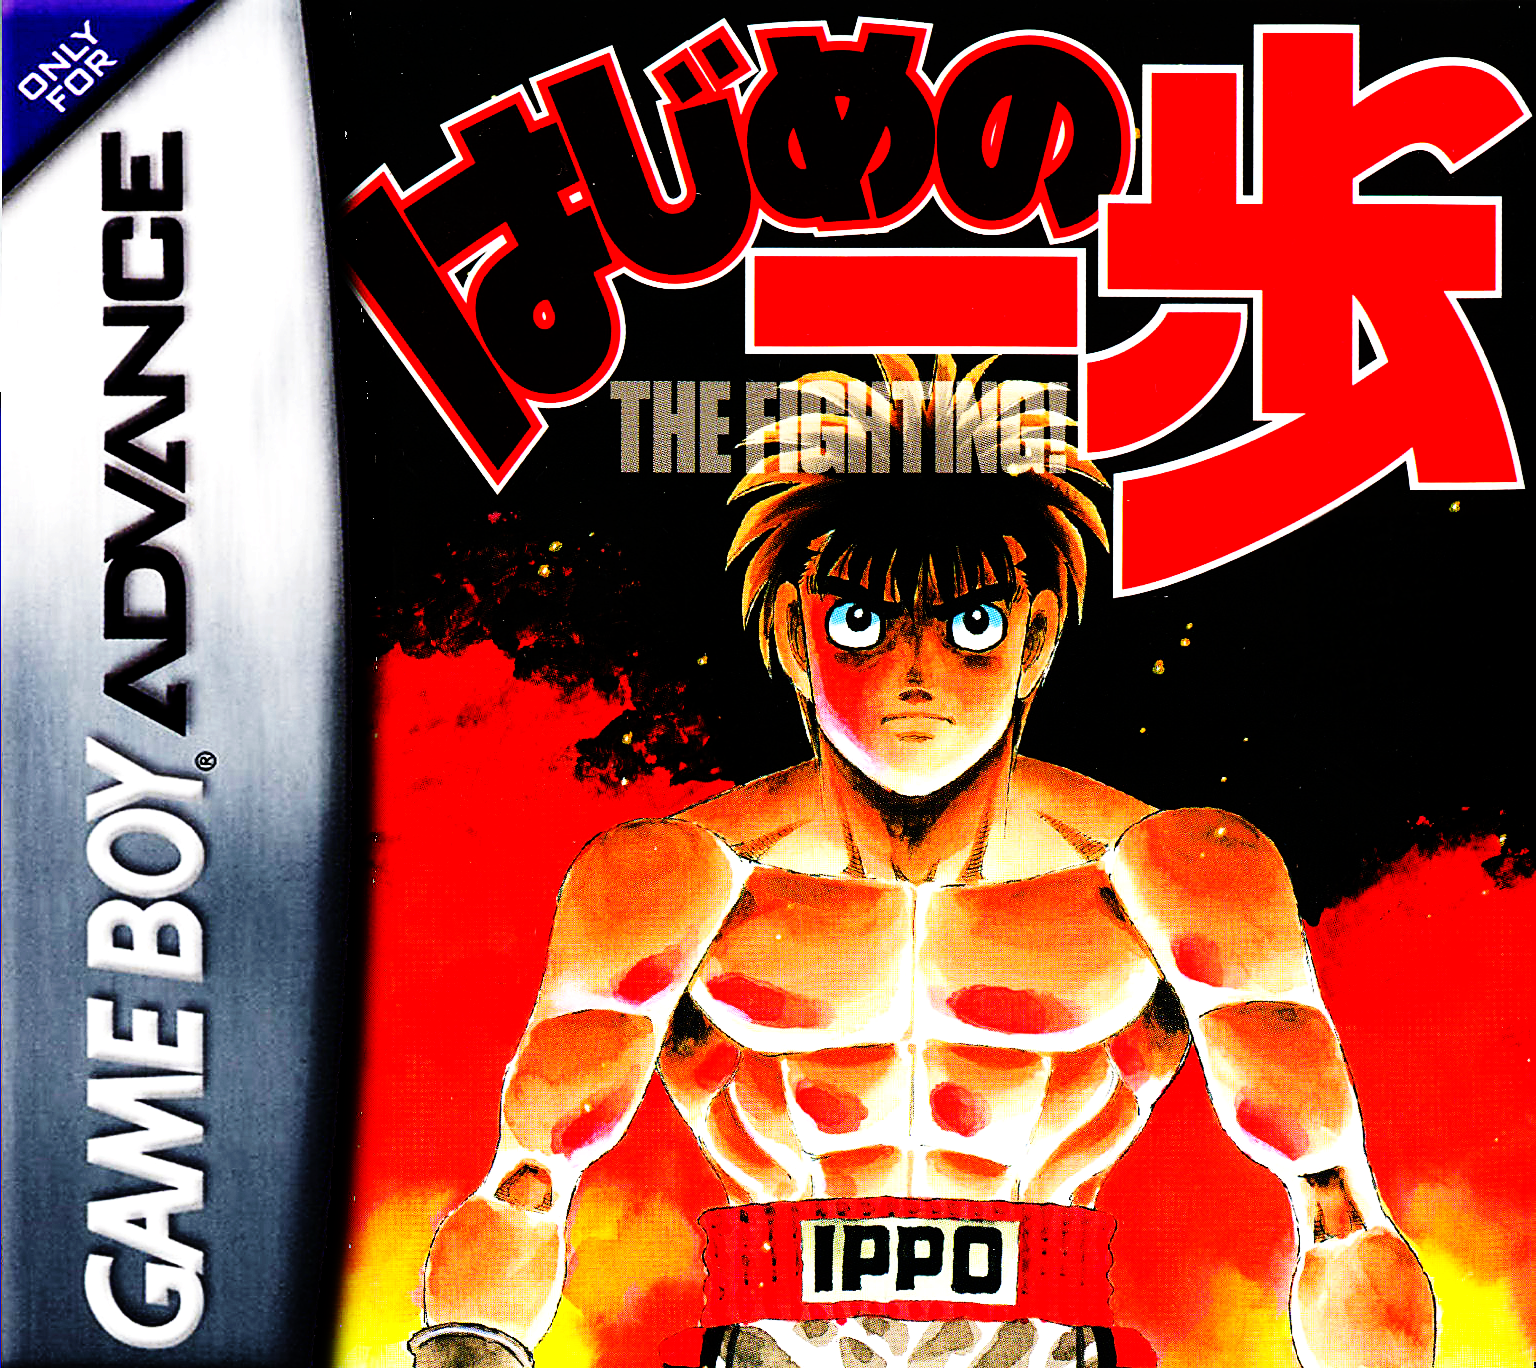 Play Hajime no Ippo (english translation) Online - Play All Game Boy  Advance Games Online